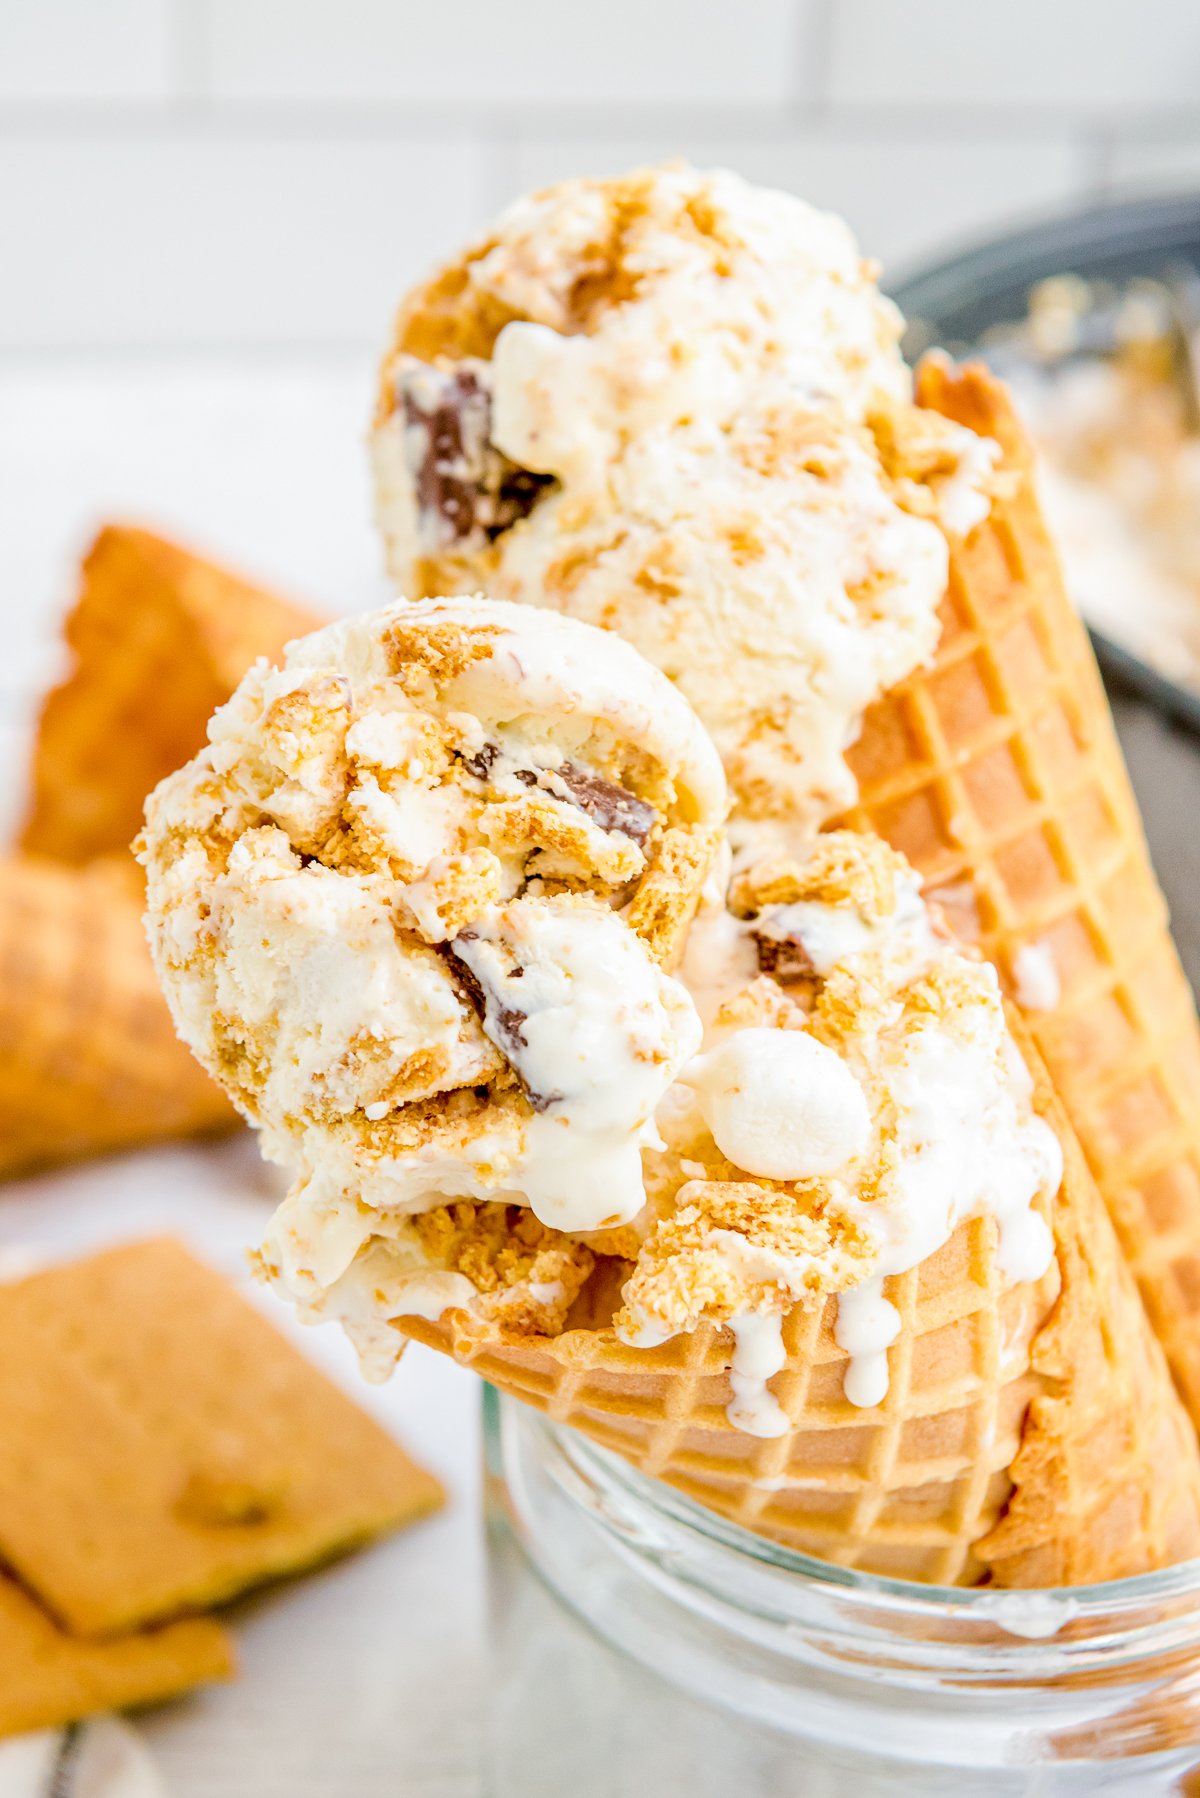 Two ice cream cones filled with ice cream.